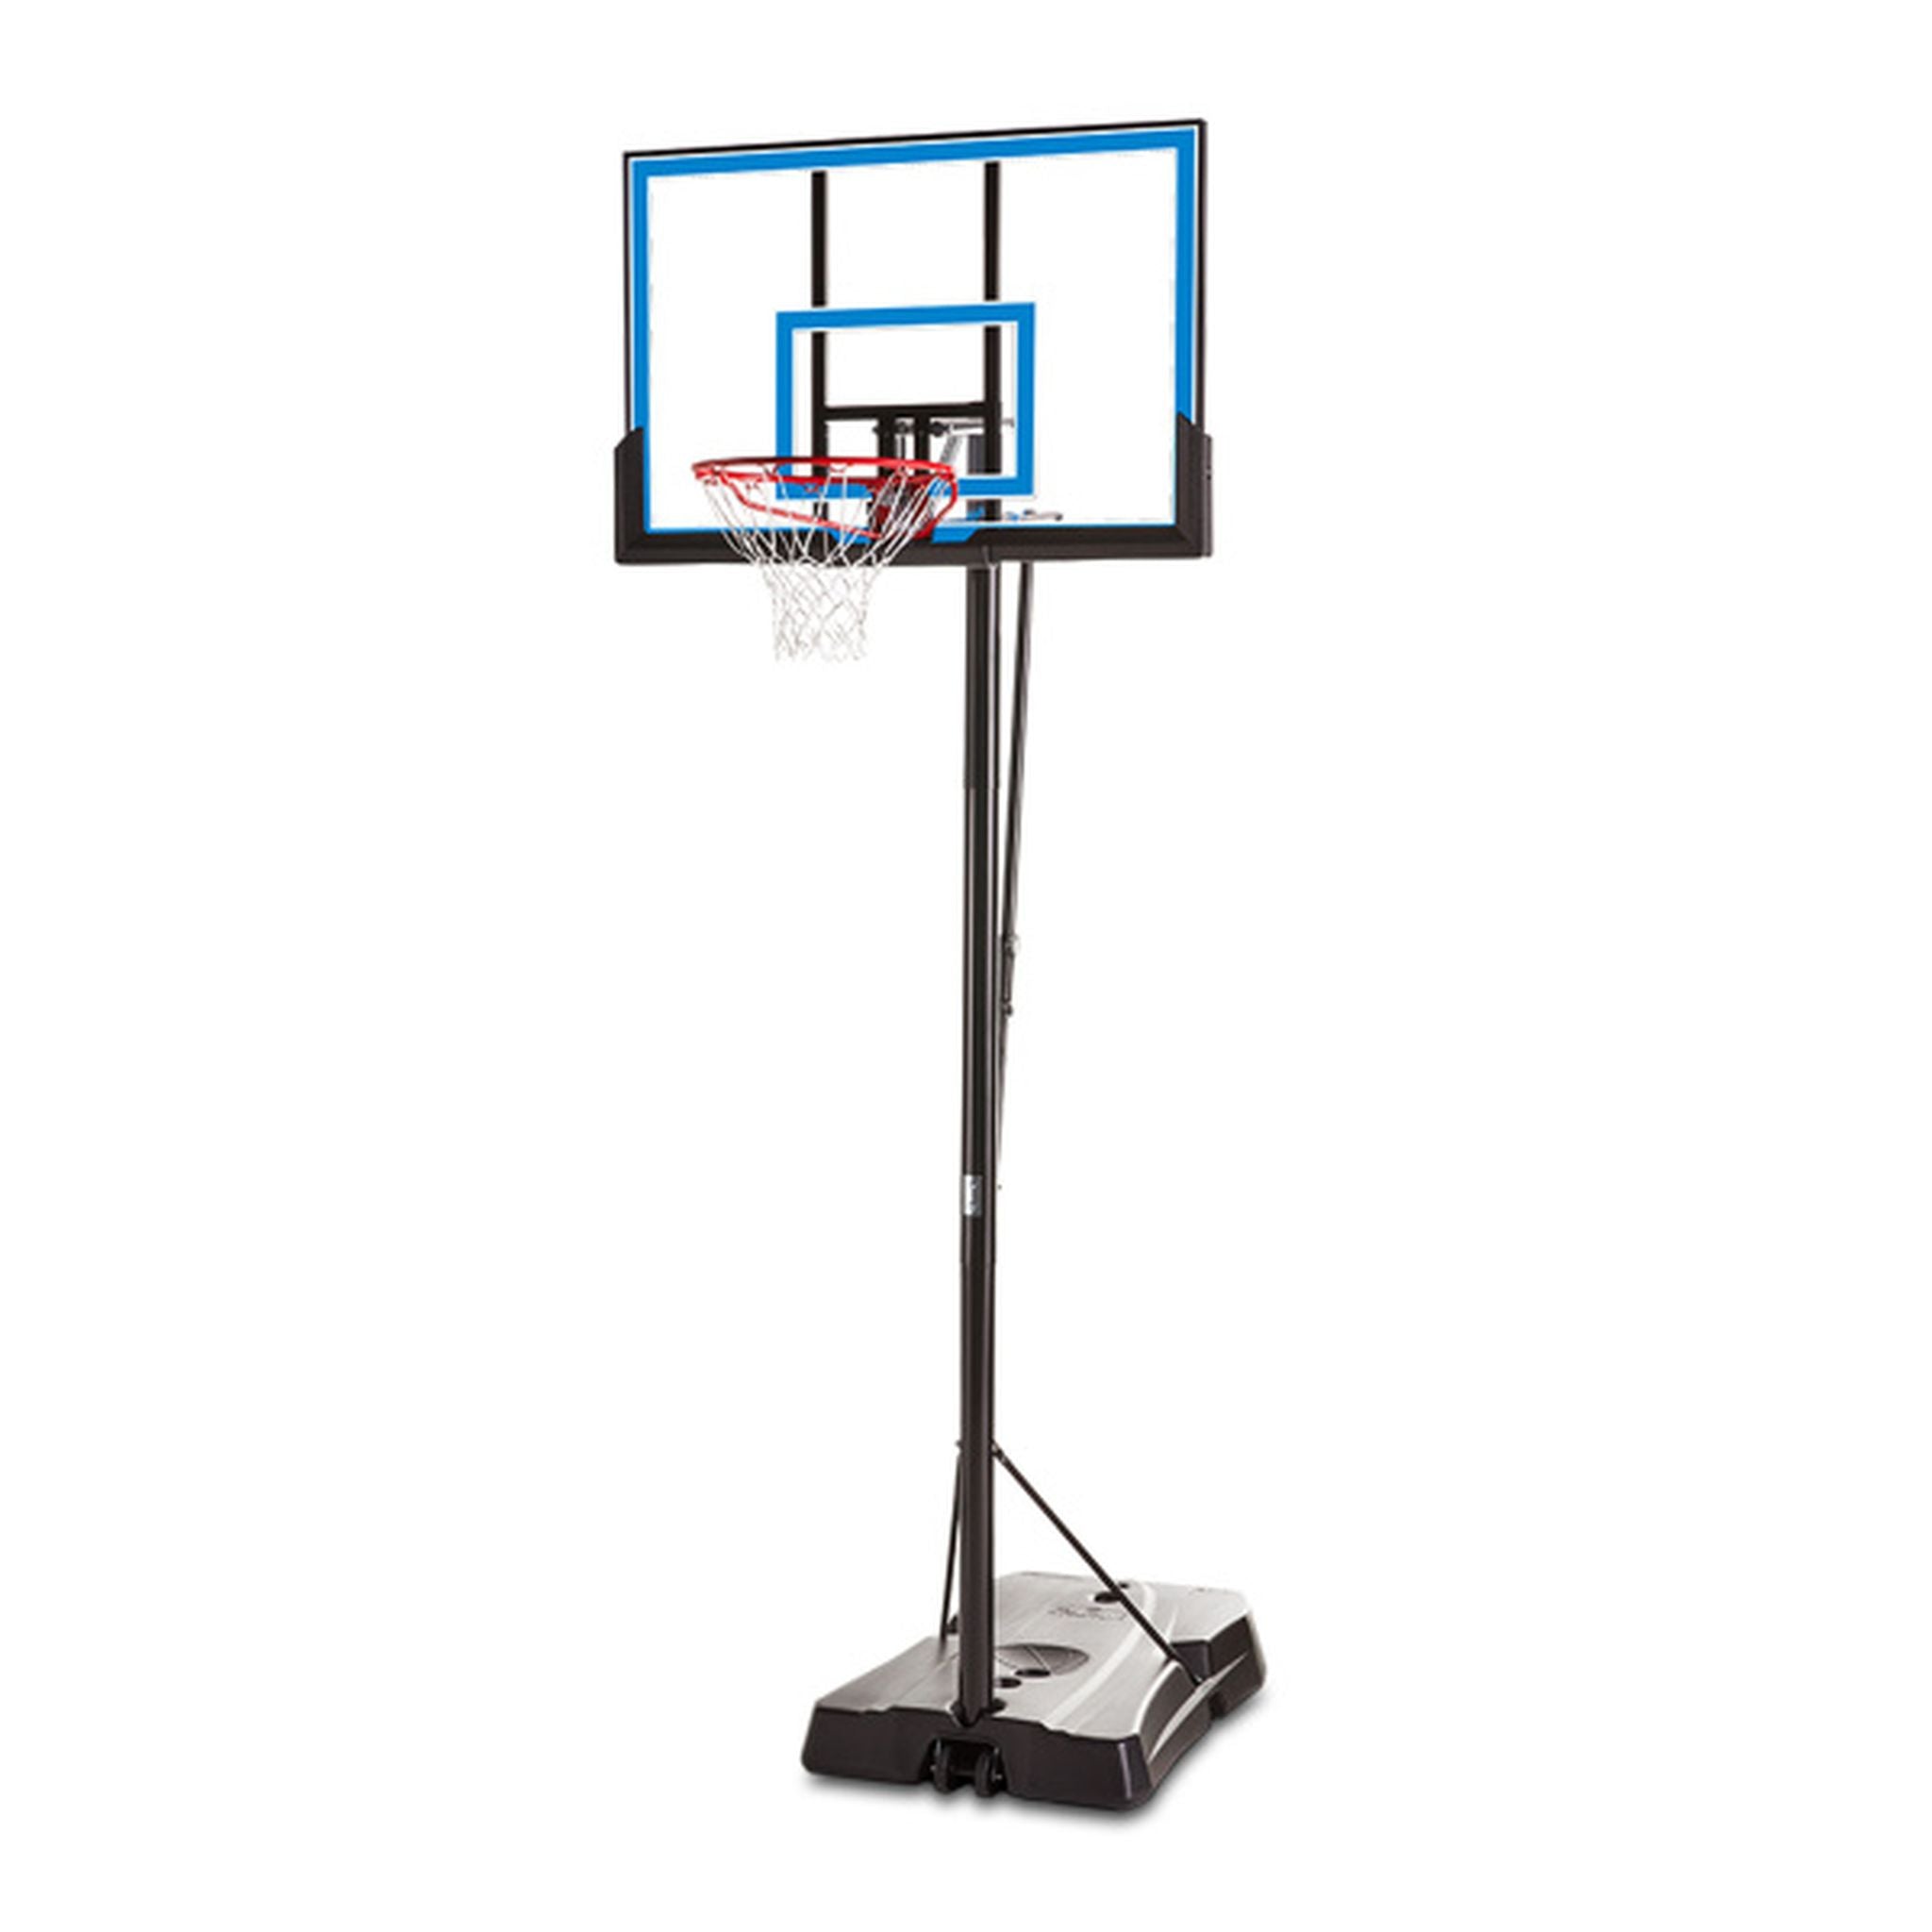 Spalding 48-inch Pro Glide Polycarbonate Portable Basketball System